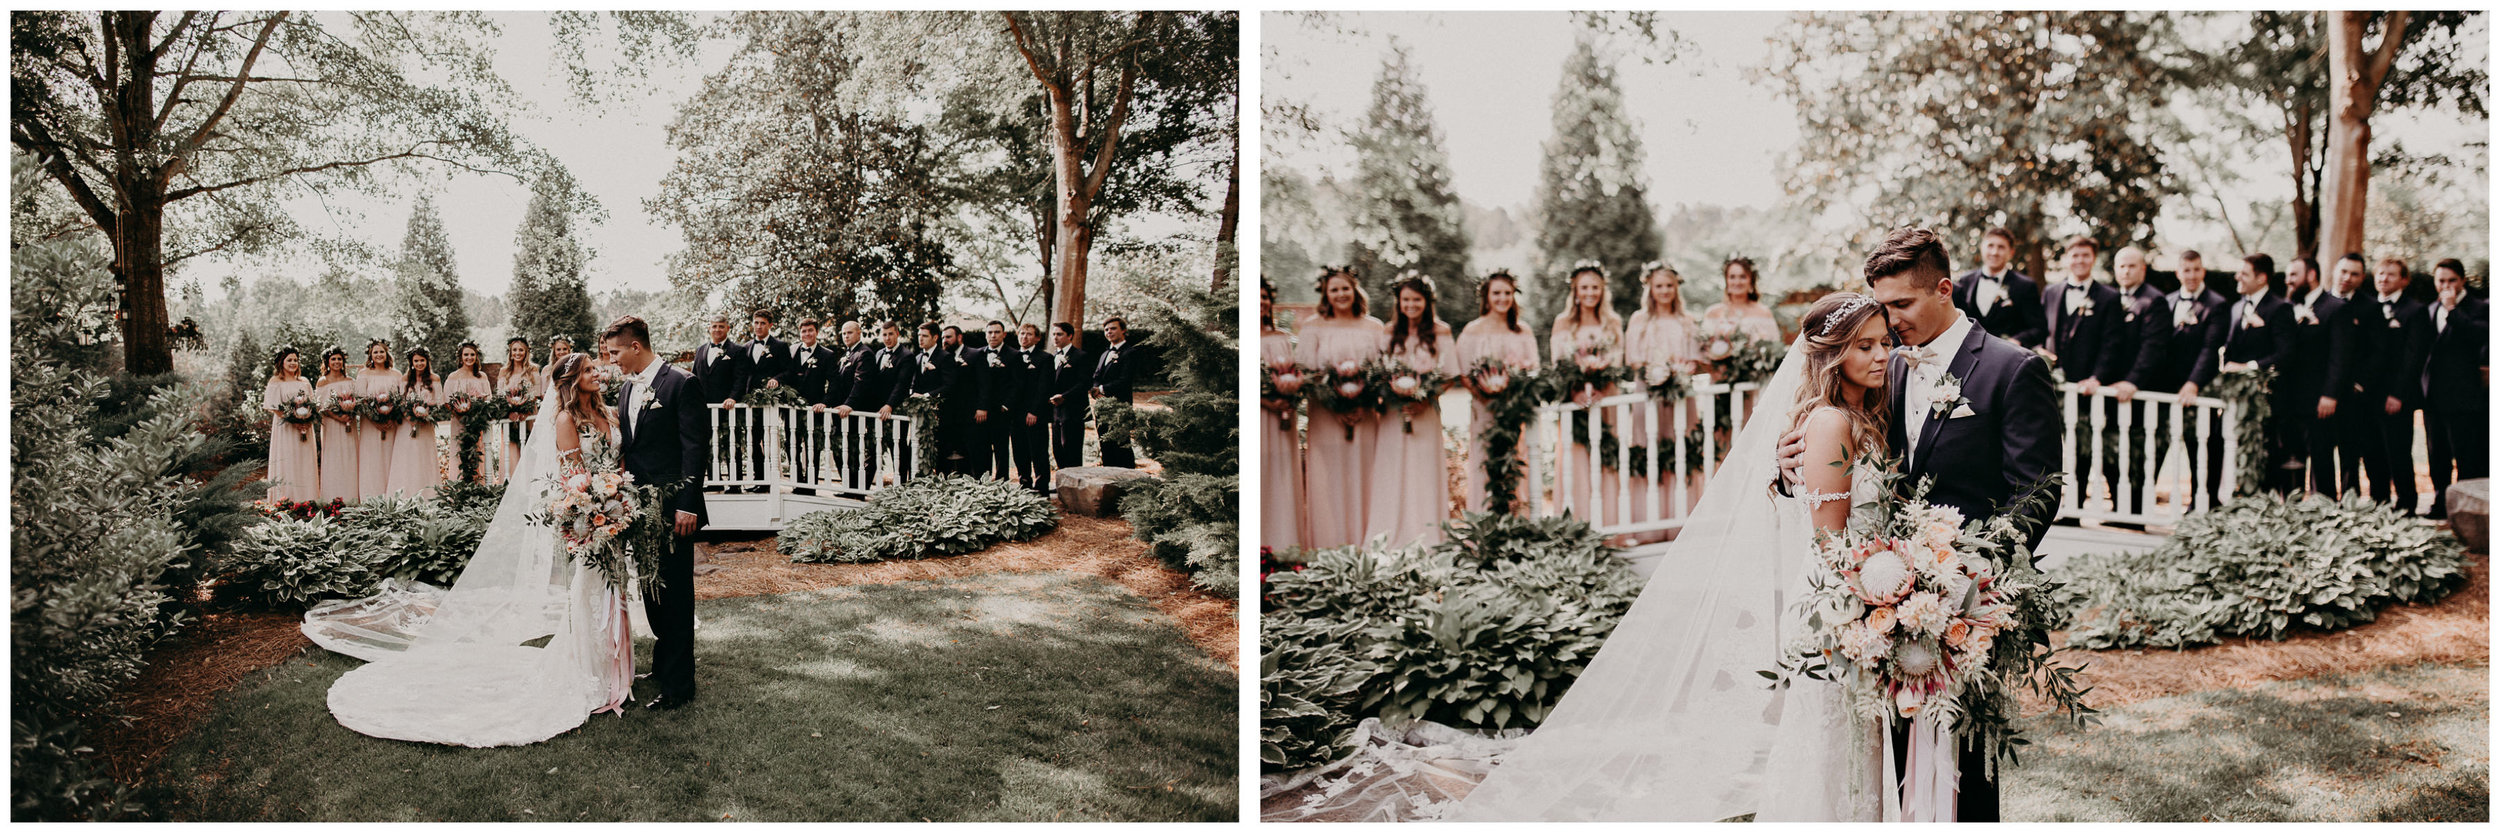 46Carl House Wedding Venue Ga, Atlanta Wedding Photographer - Boho, Bohemian, Junebug Weddings, Vintage, Retro, Trendy. Aline Marin Photography. .jpg